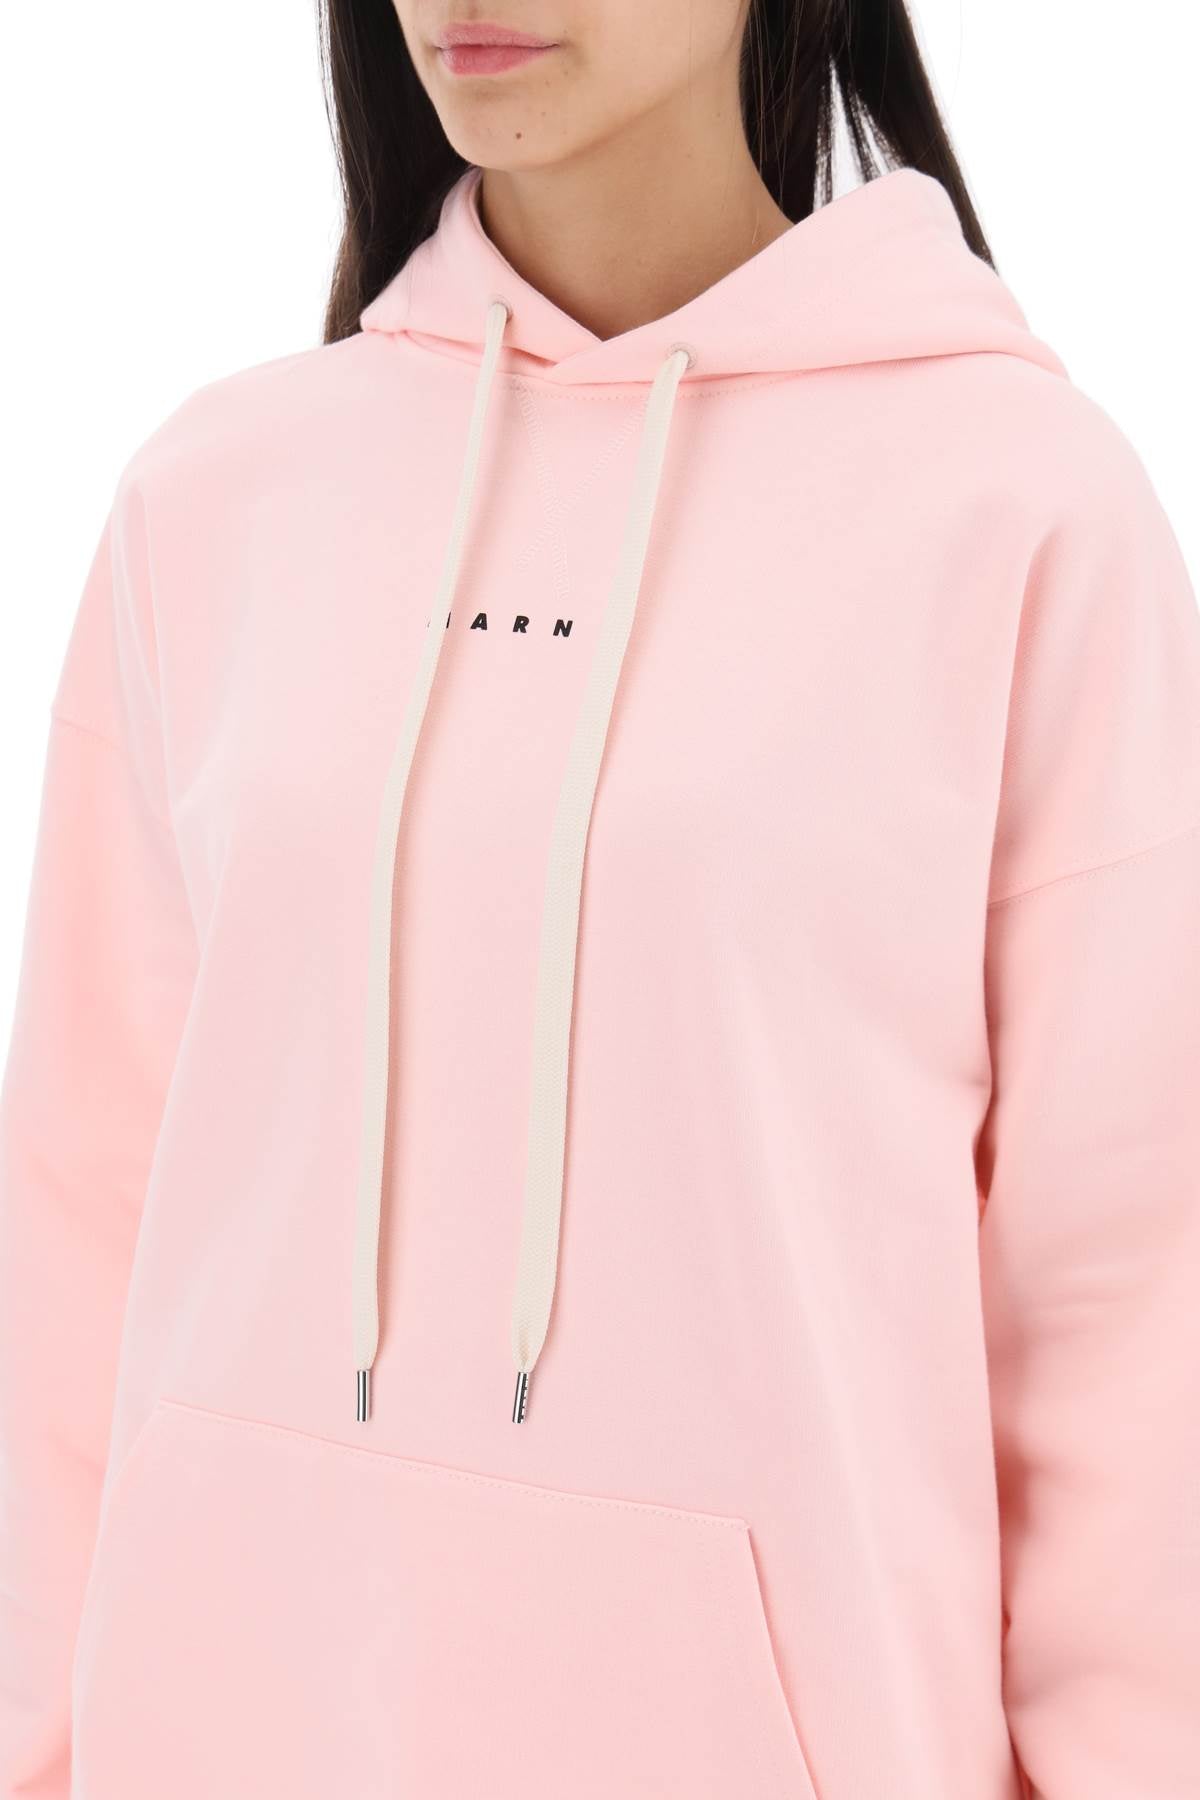 Marni hoodie with logo print-3